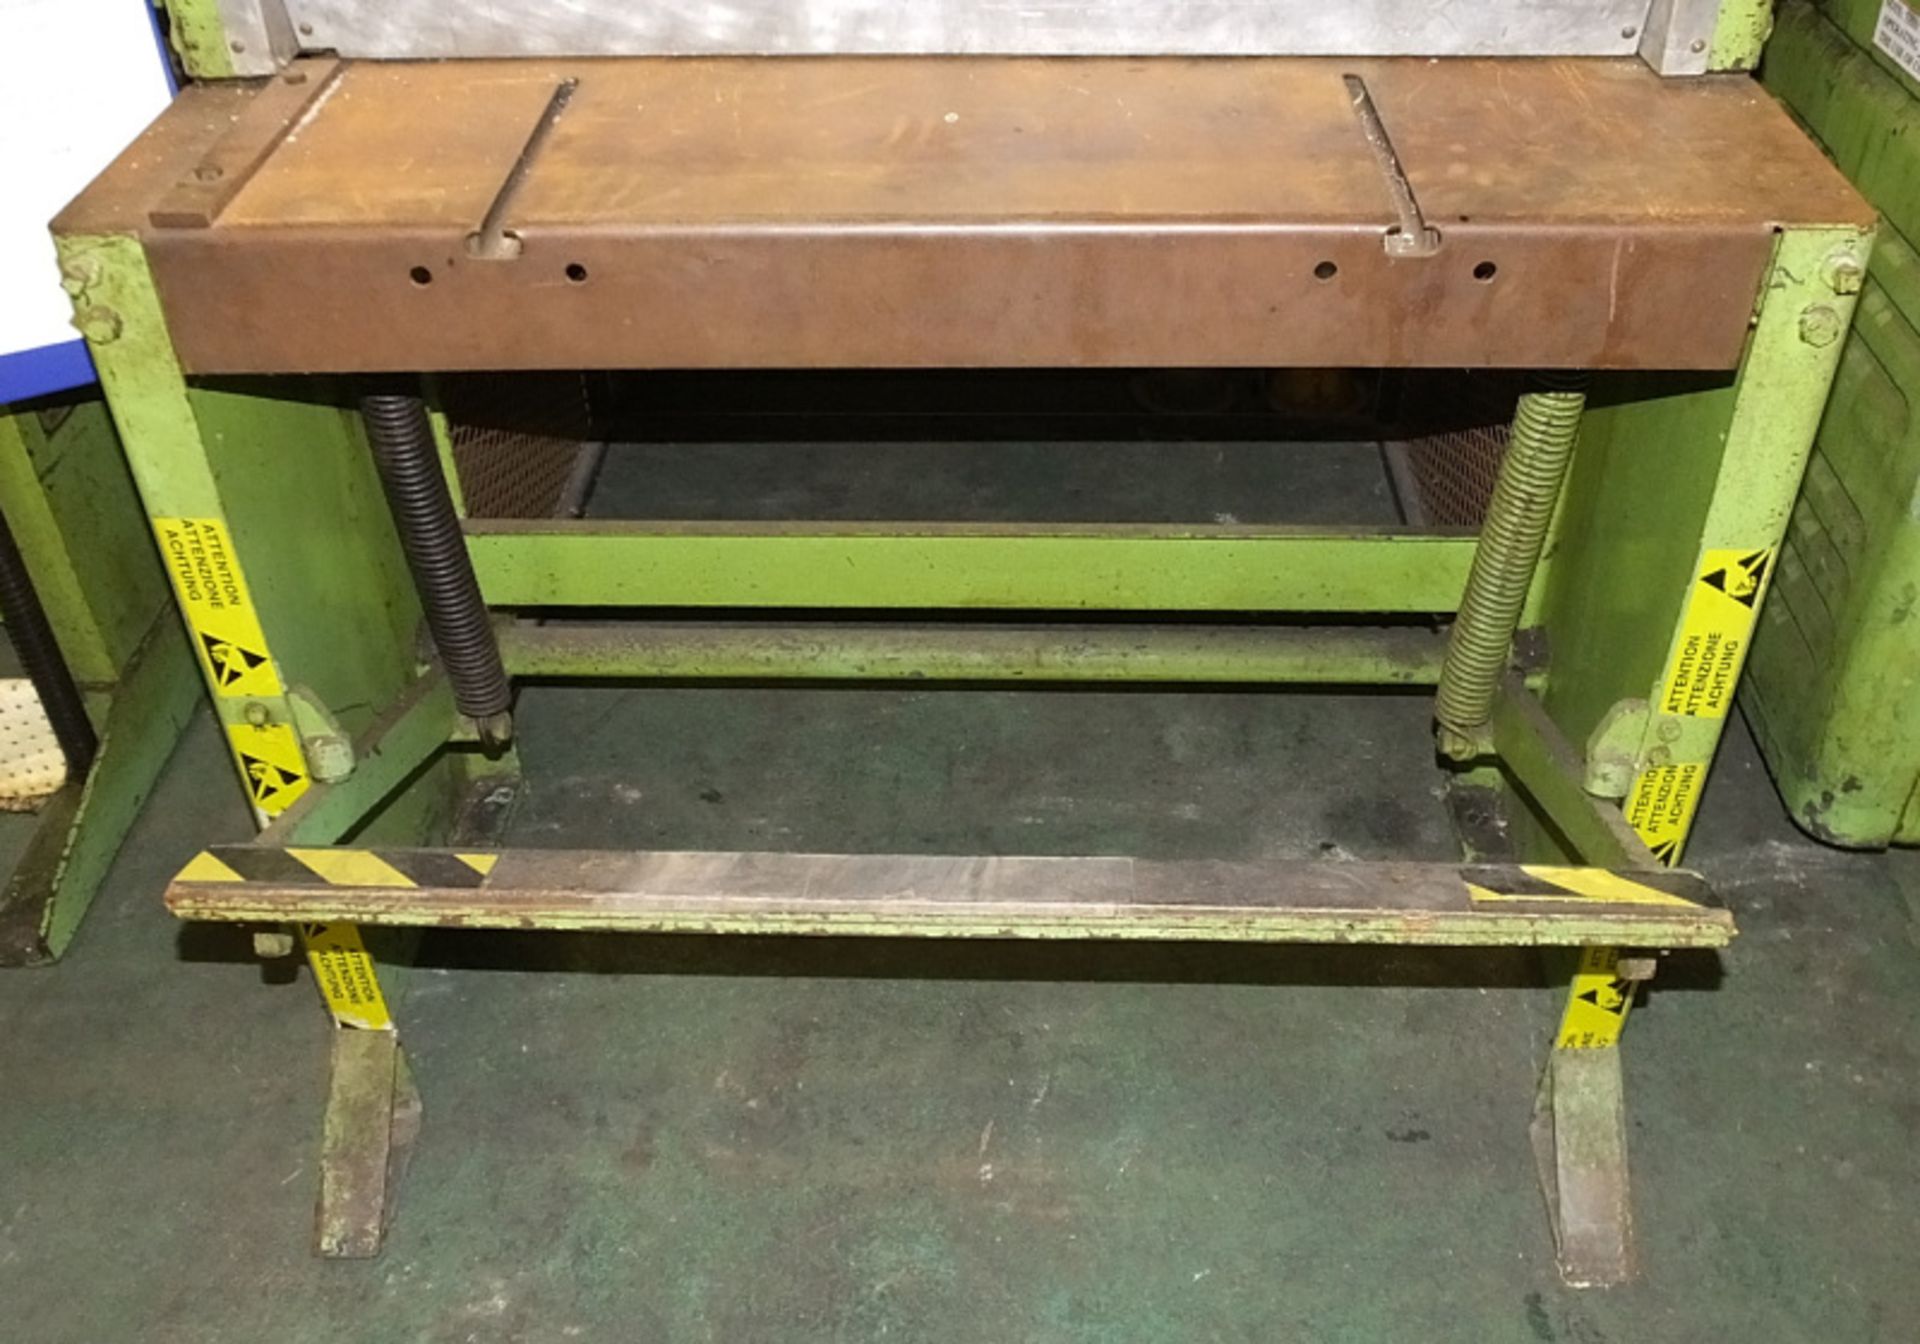 FJ Edwards Ltd manual guillotine - machine no 3780 ISS 2 - 88C 8747 - 3ft x 16G - Image 3 of 6